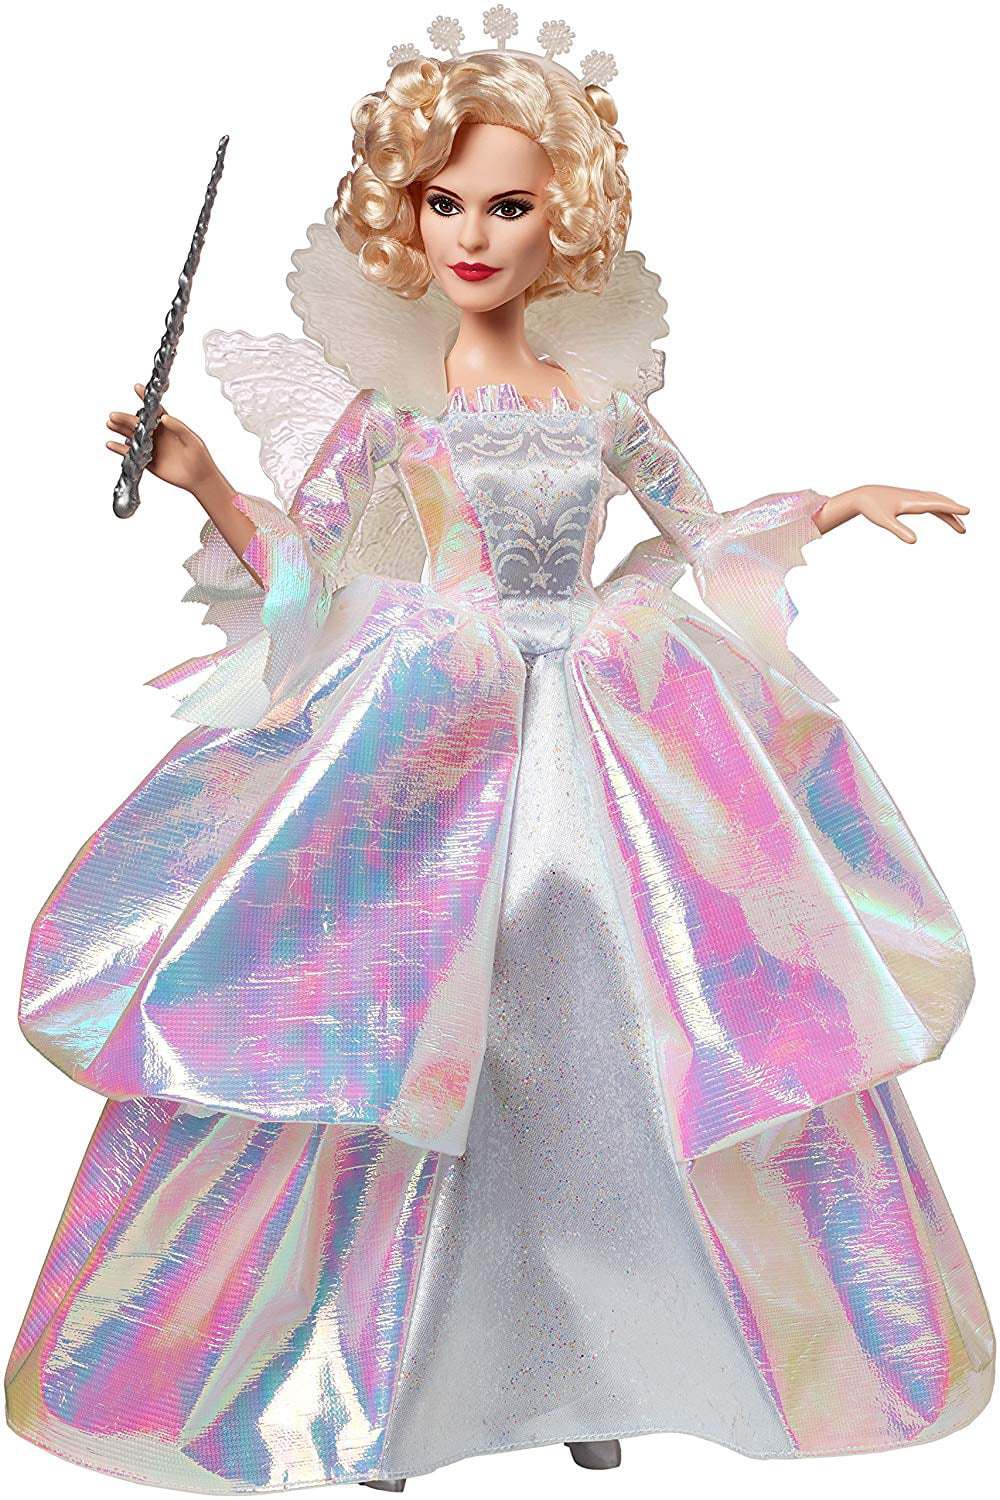 Disney Cinderella Fairy Godmother Barbie Doll 2014 Mattel Cgt59 NRFB for sale online